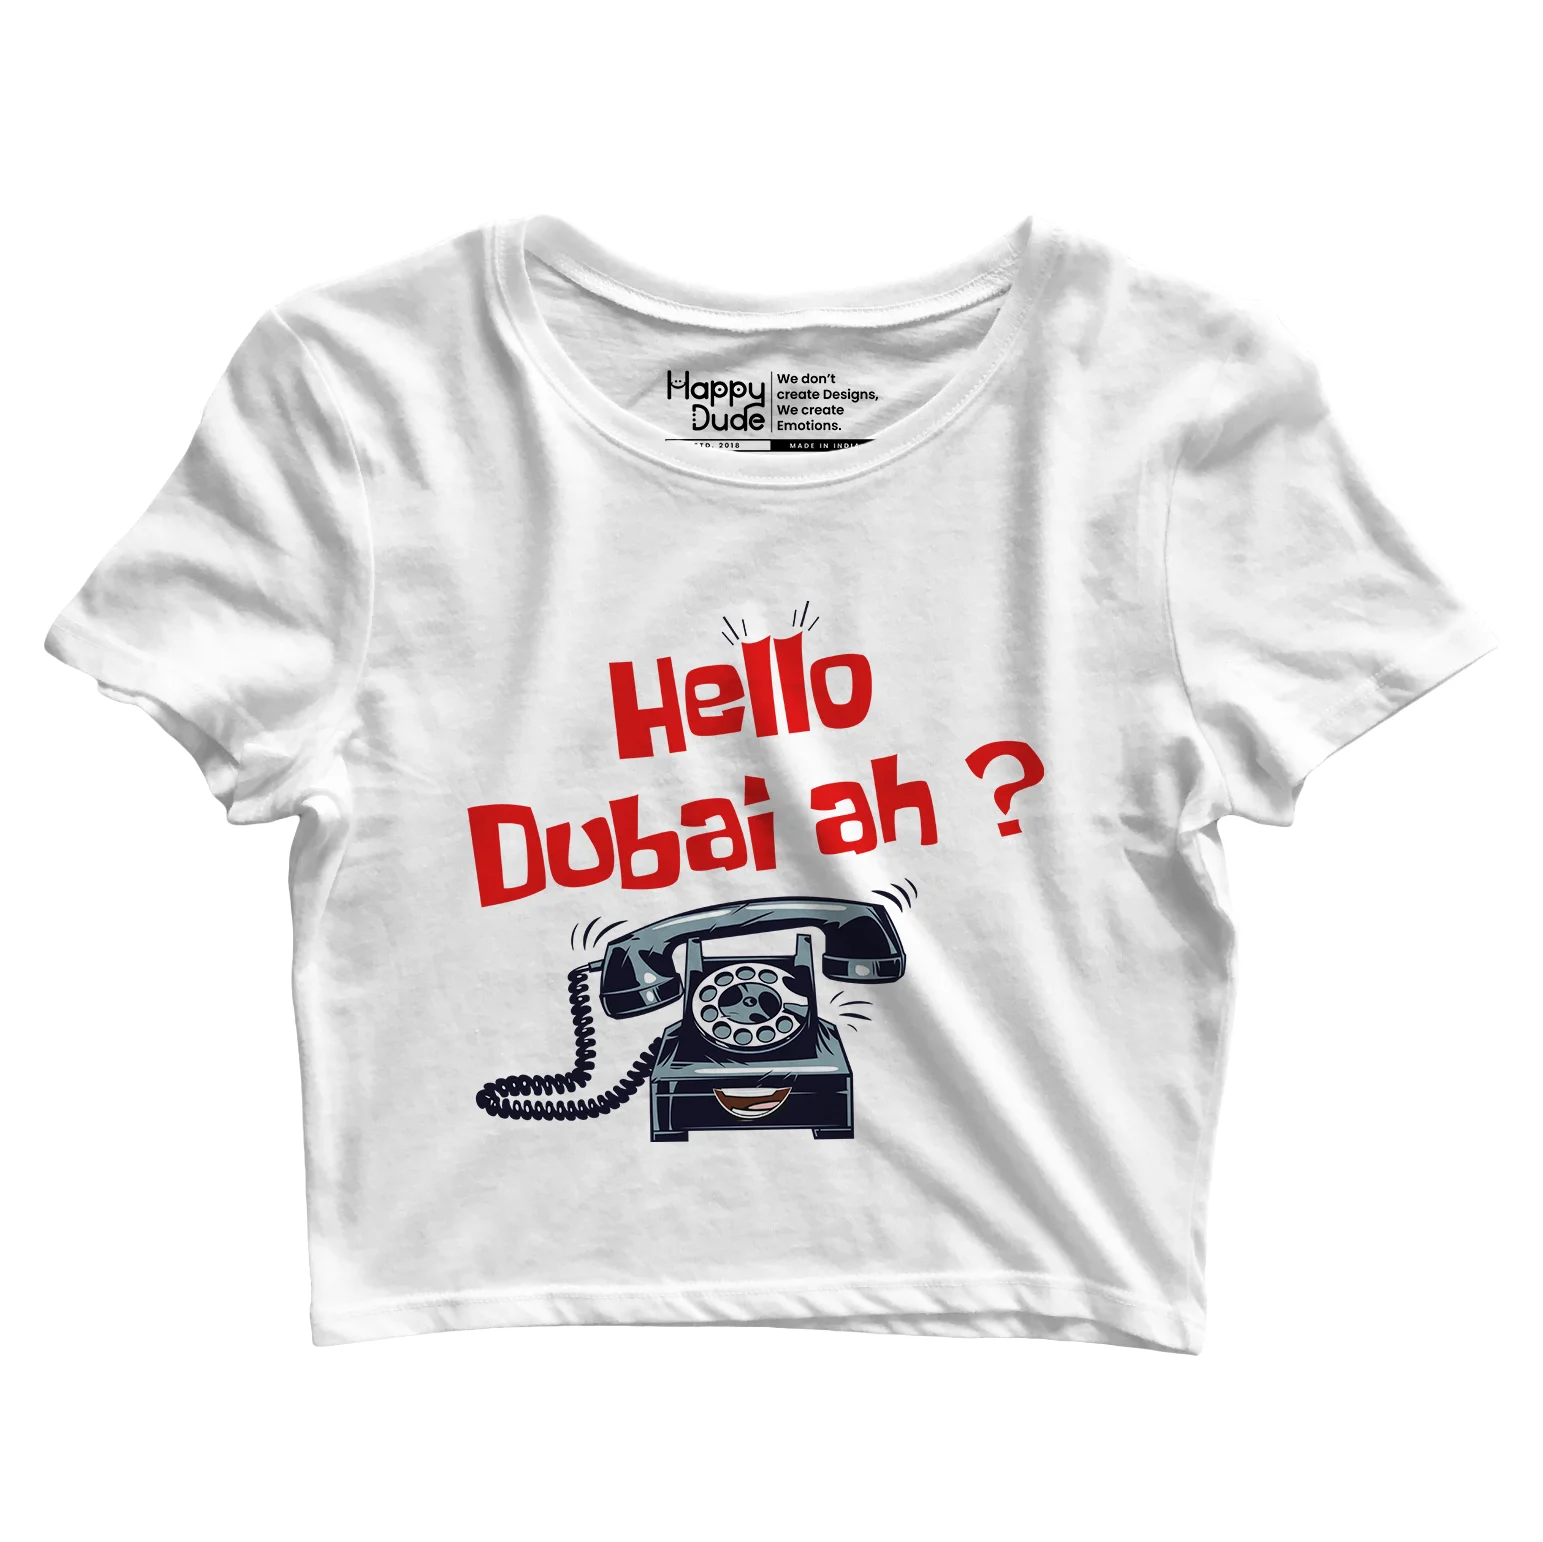 Hello Dubai-Ah? T-Shirt